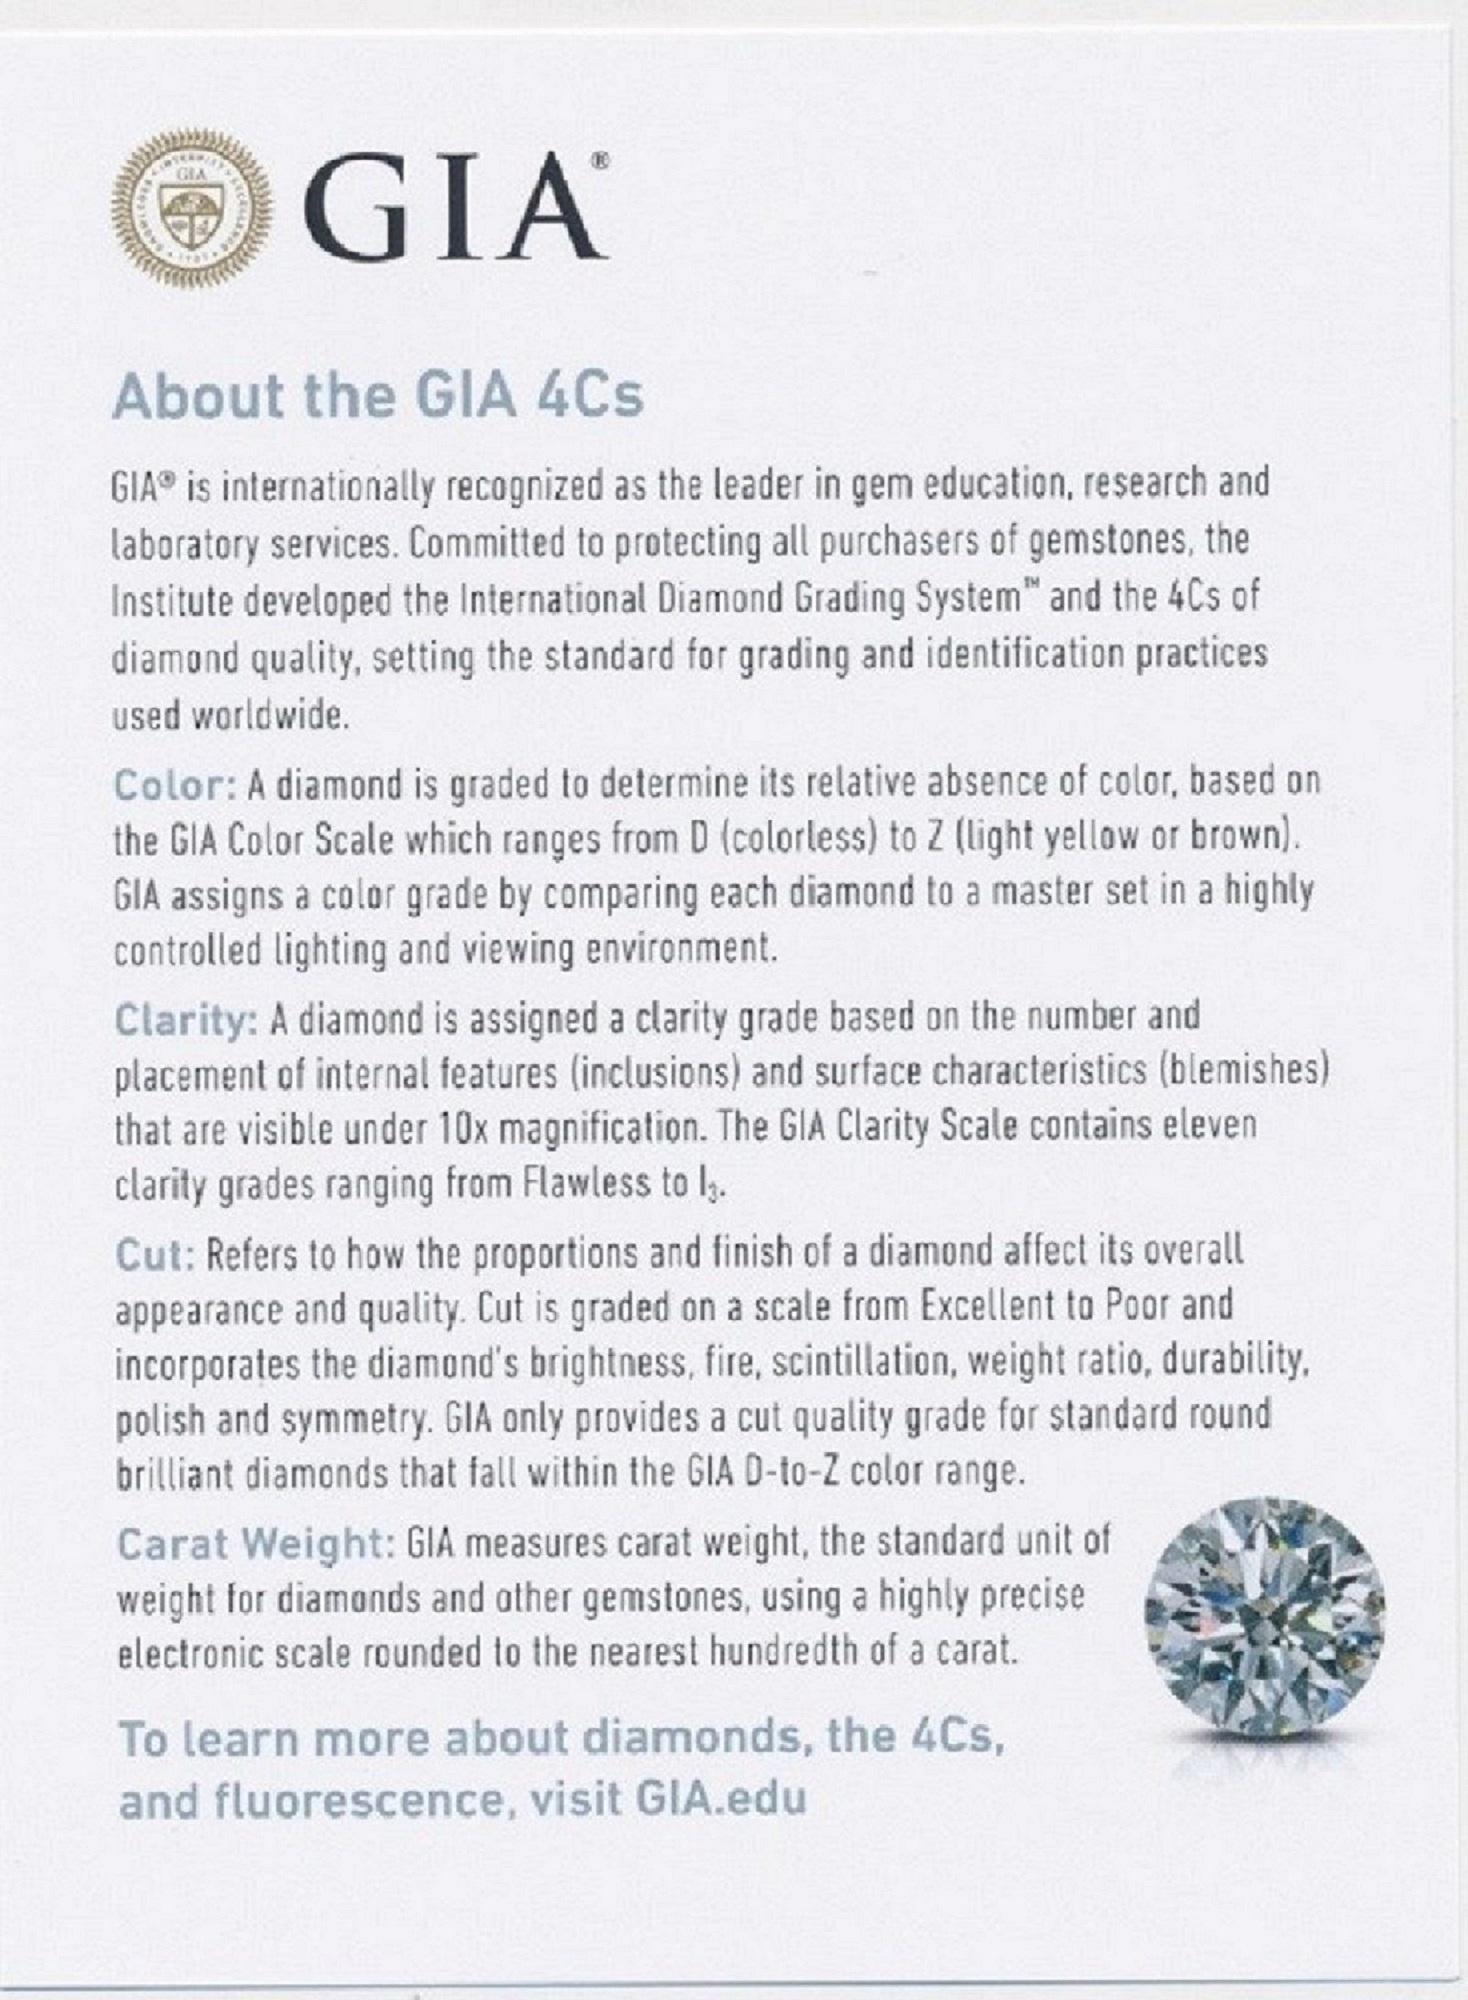 Stunning 18k White Gold Three Stone Ring 1.15ct Natural Diamonds GIA Certificate 4